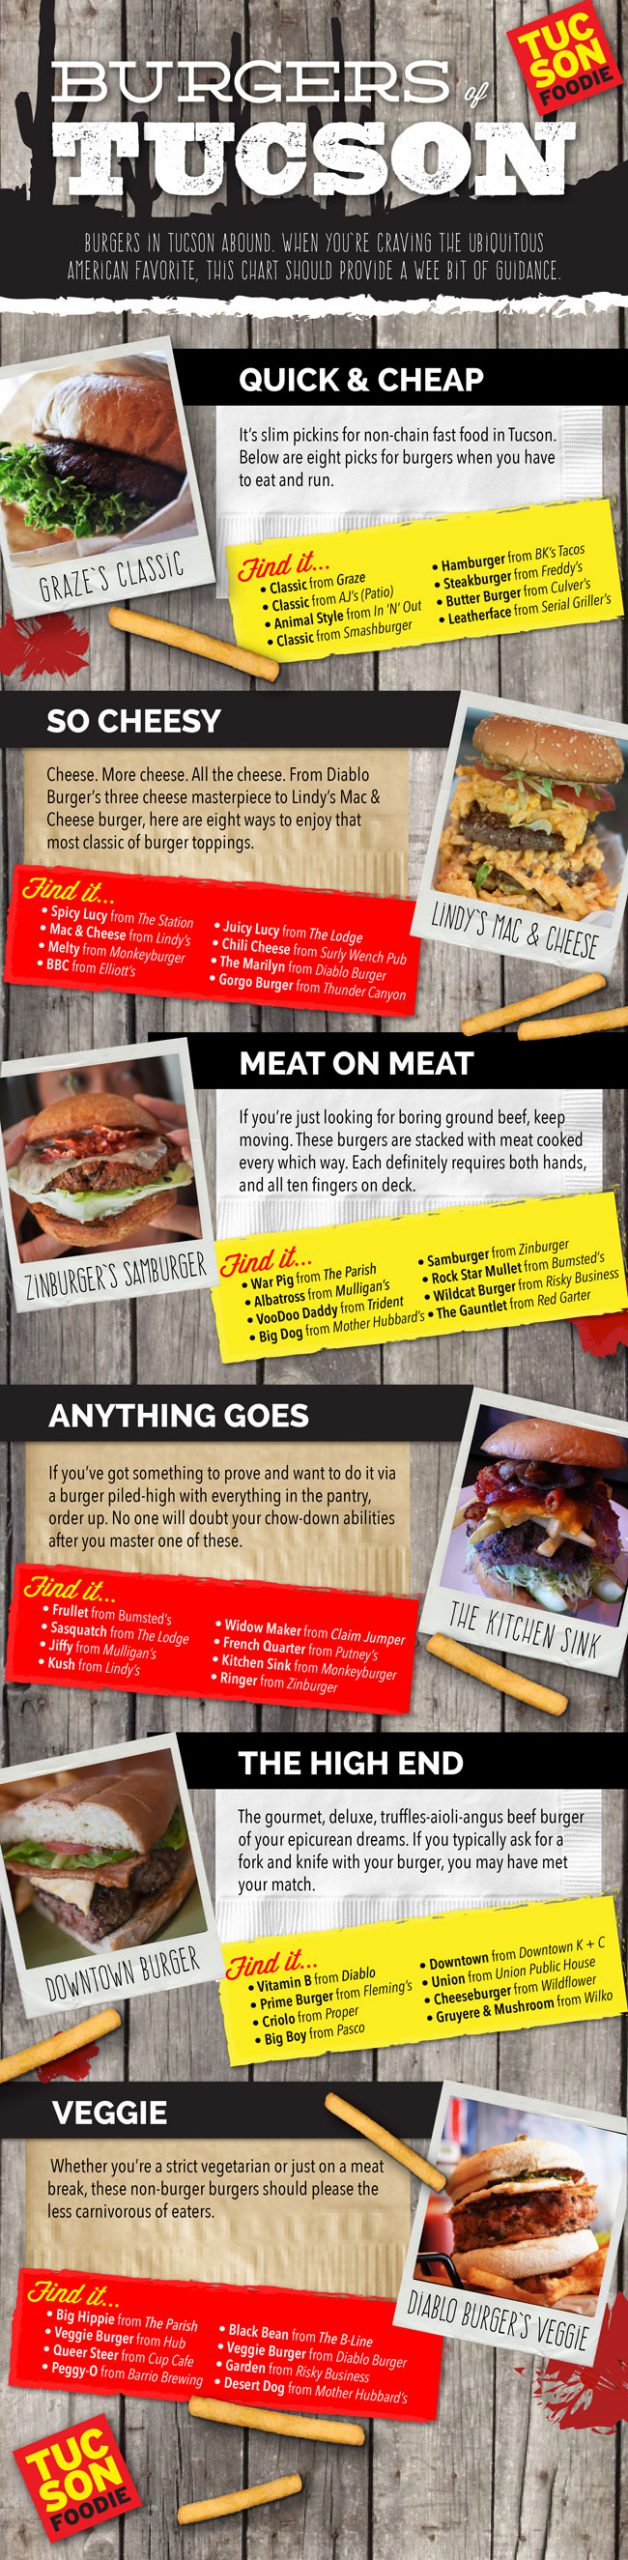 Burgers of Tucson Infographic